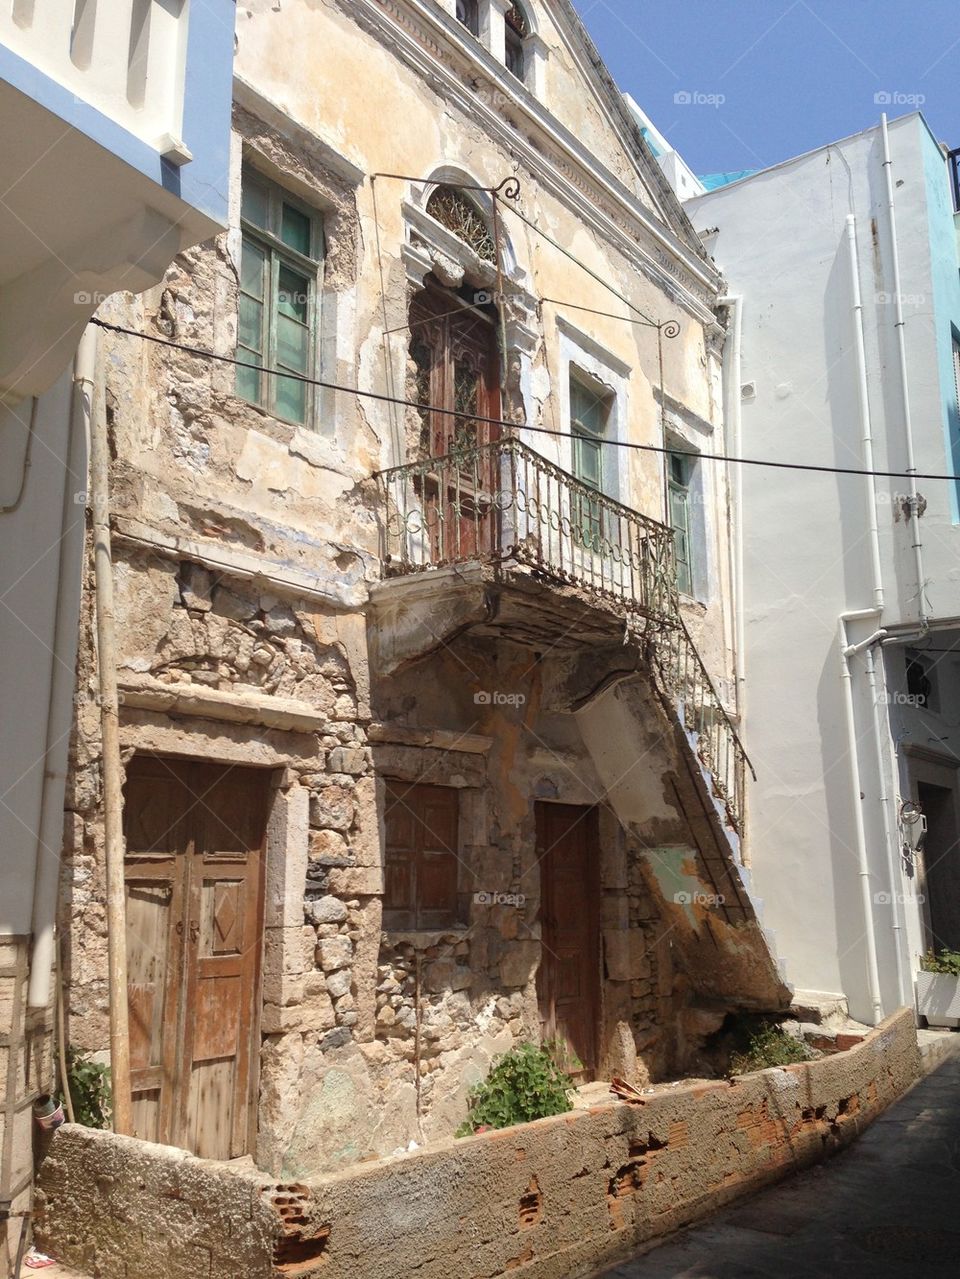 Kalymnos, summer, heat, Greece, vacation, building, street, old